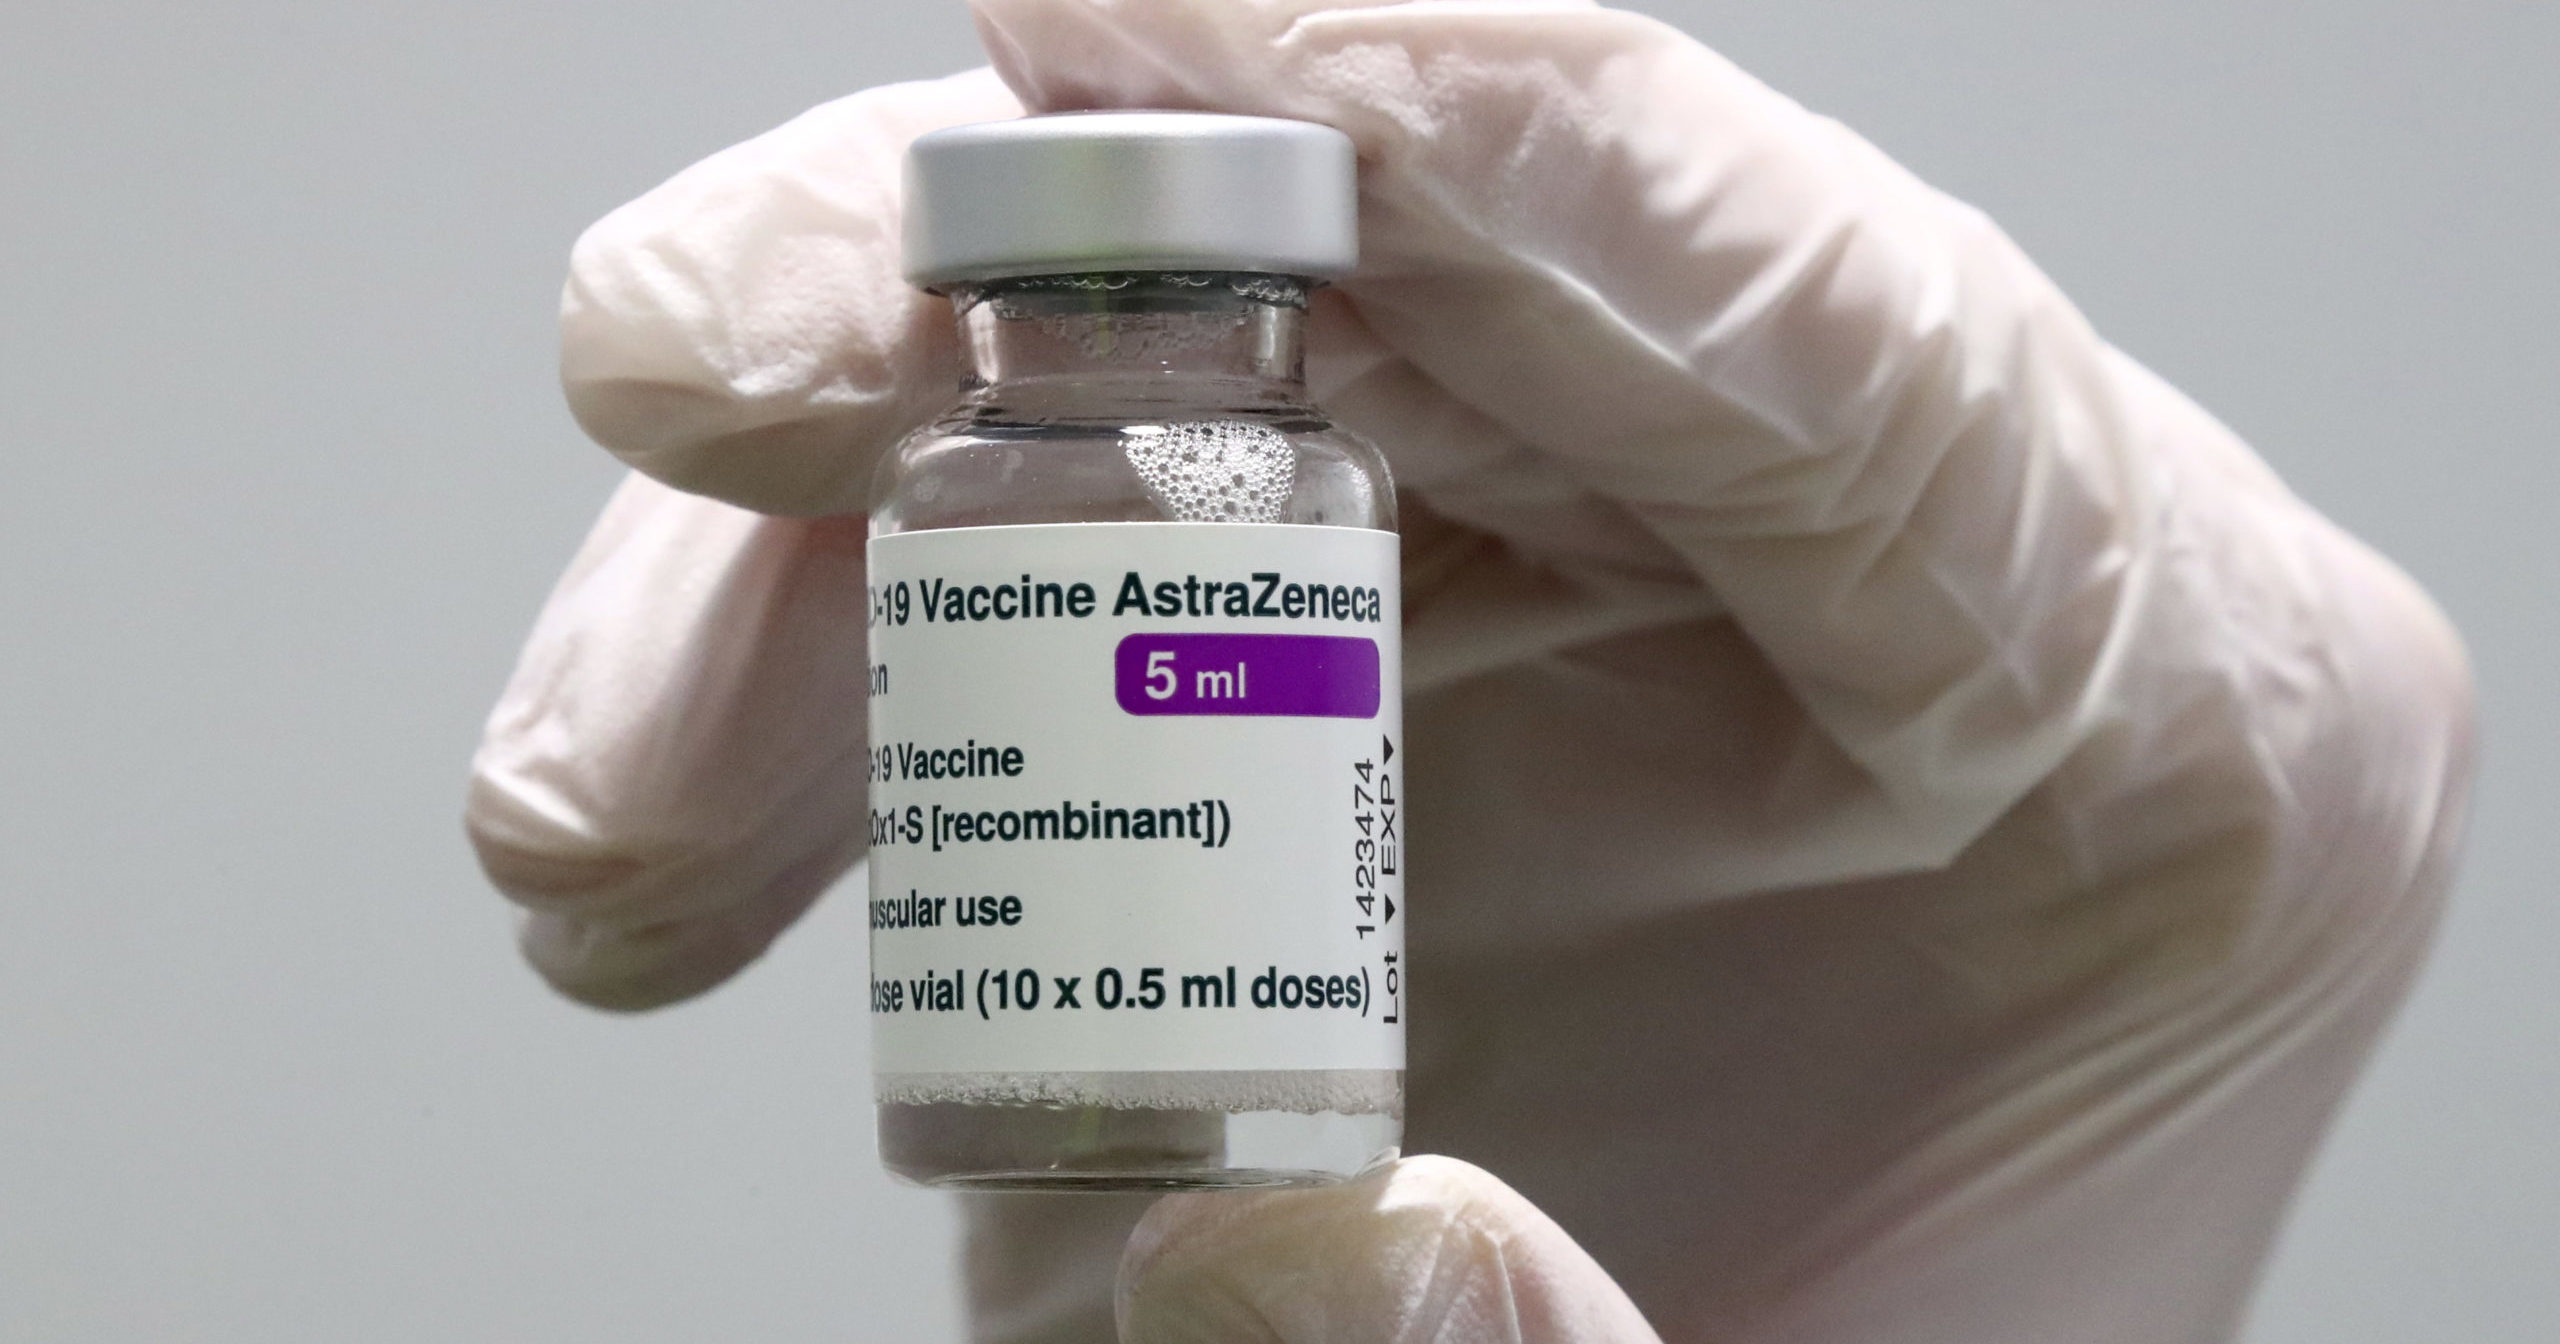 Medical staff prepare an AstraZeneca COVID-19 vaccine in Ebersberg near Munich, Germany, on March 22, 2021.